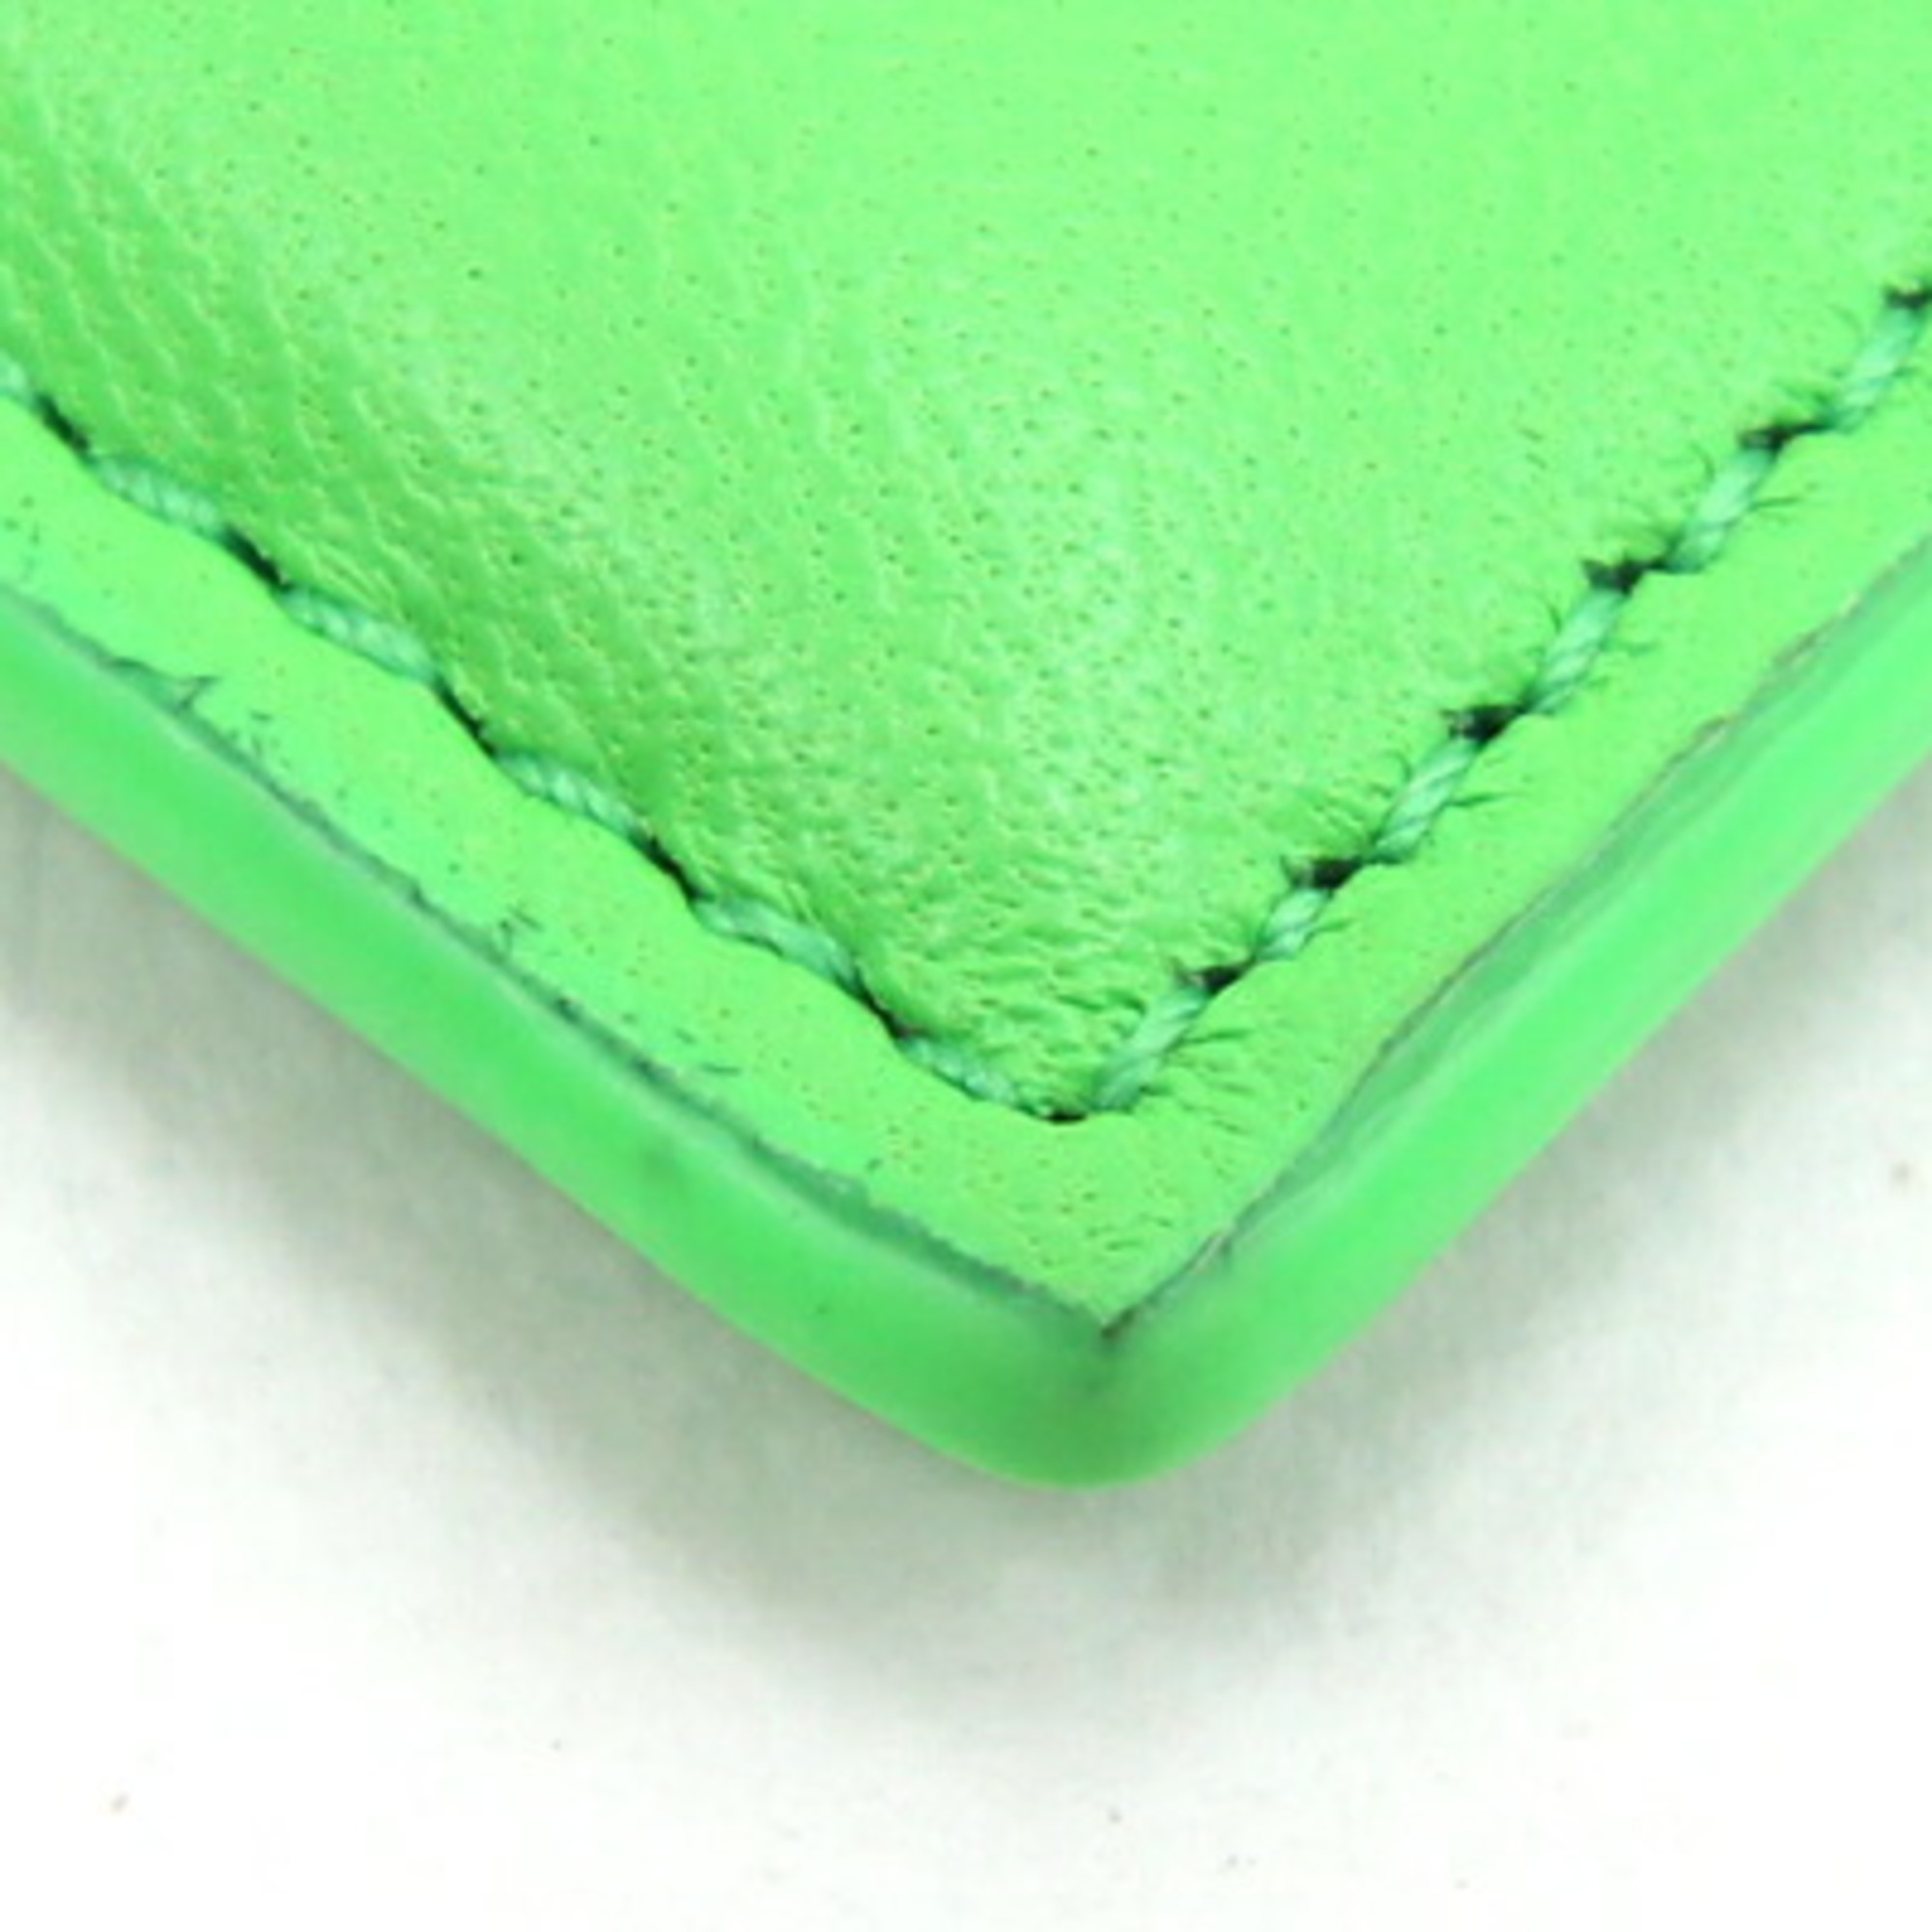 BVLGARI Card Case AMBUSH Collaboration Green Leather Pass Neon Men Women